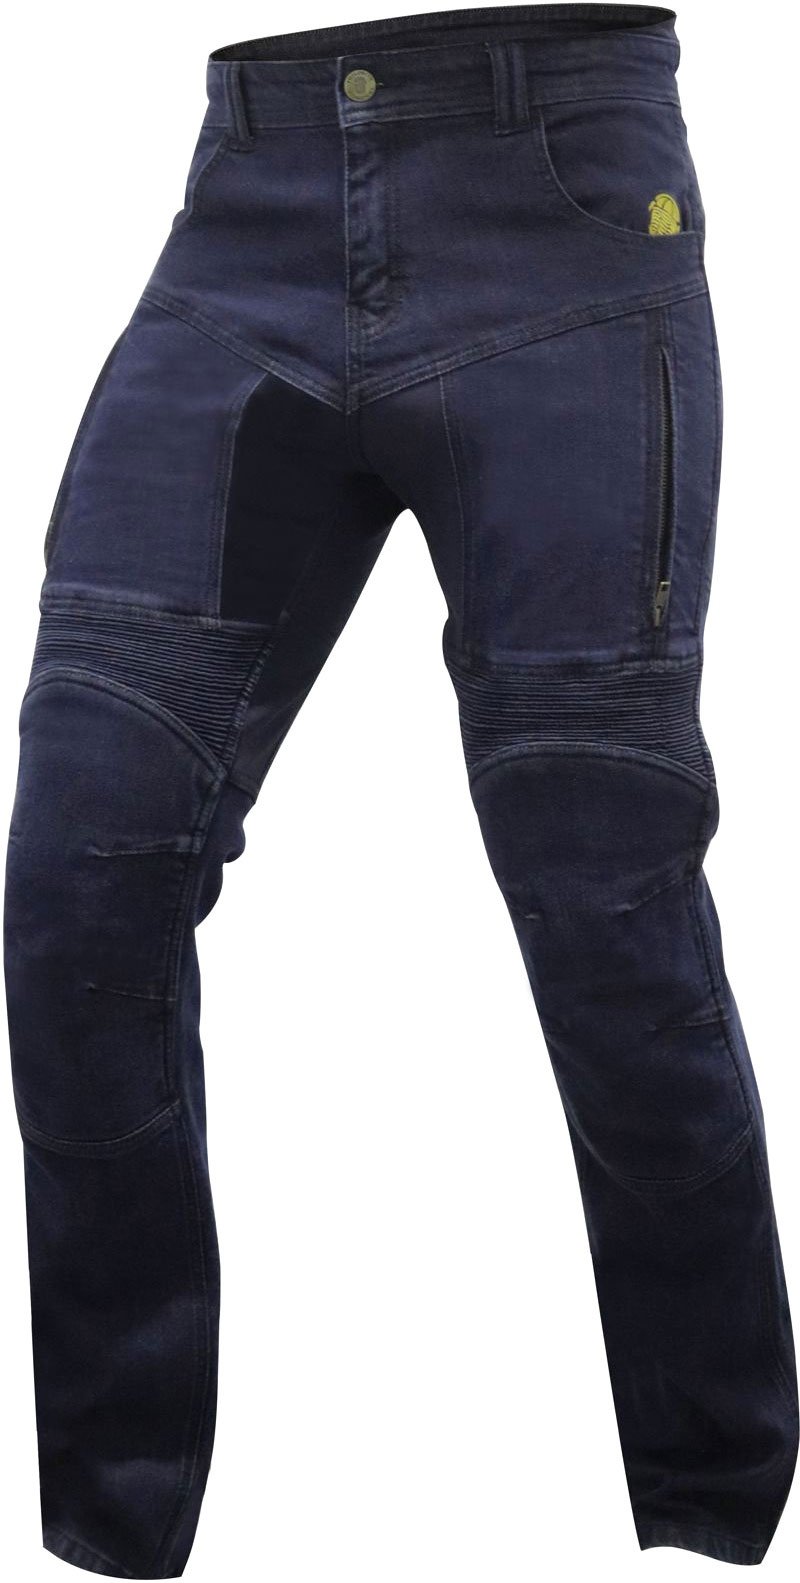 Trilobite Parado, jeans coupe ajustée - Bleu - 30